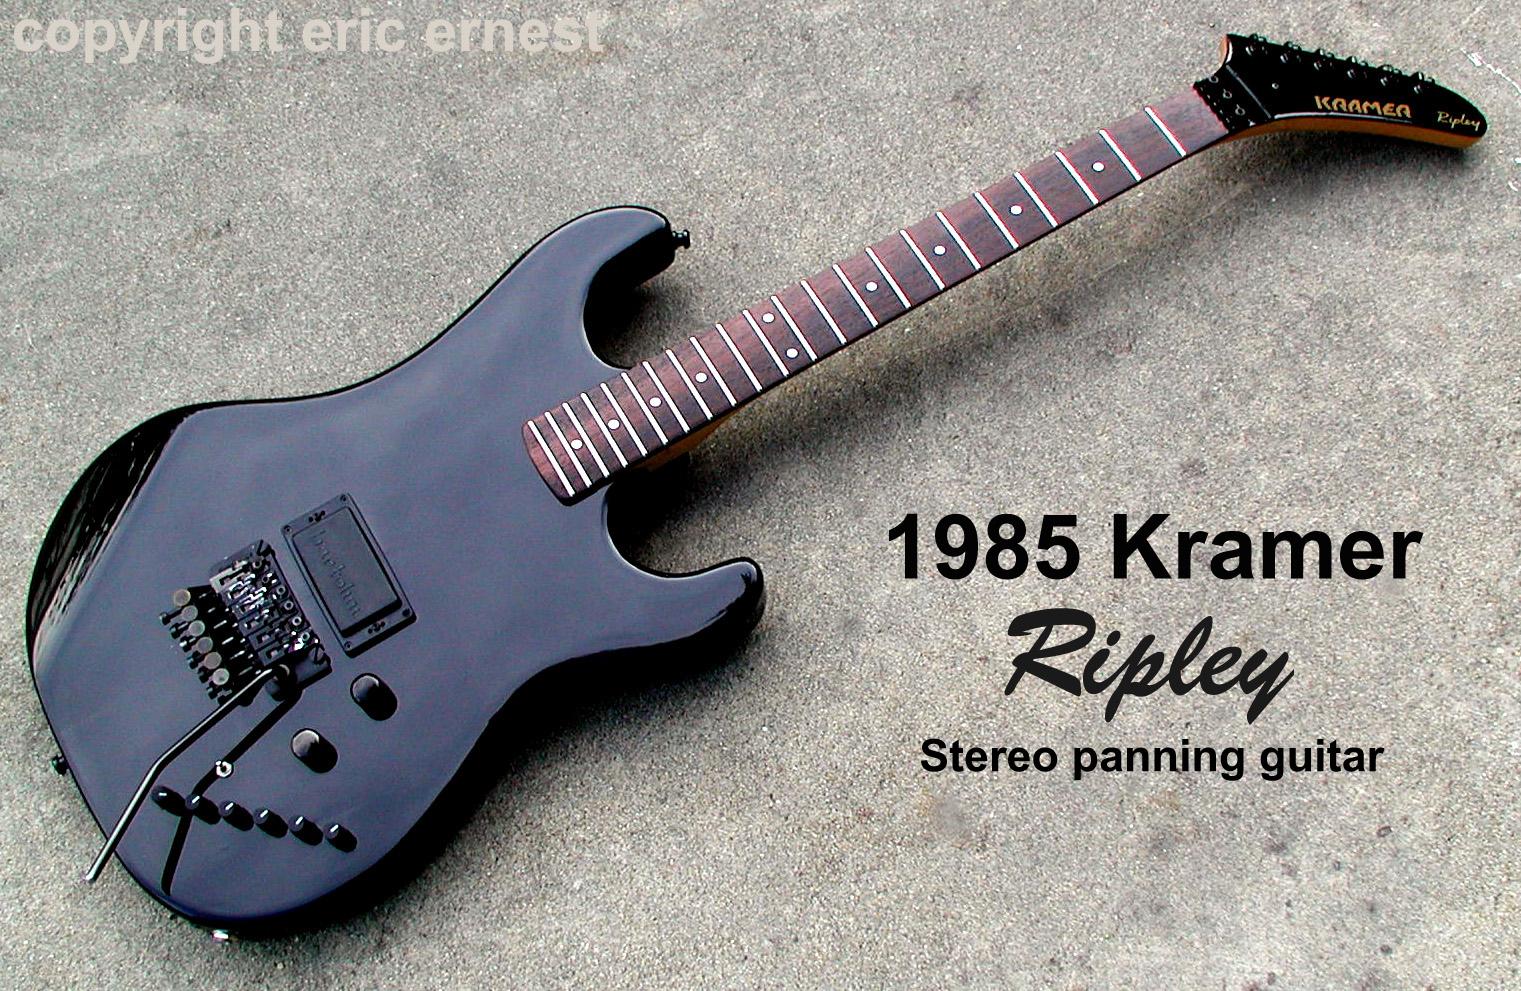 Vintage Kramer Ripley guitar